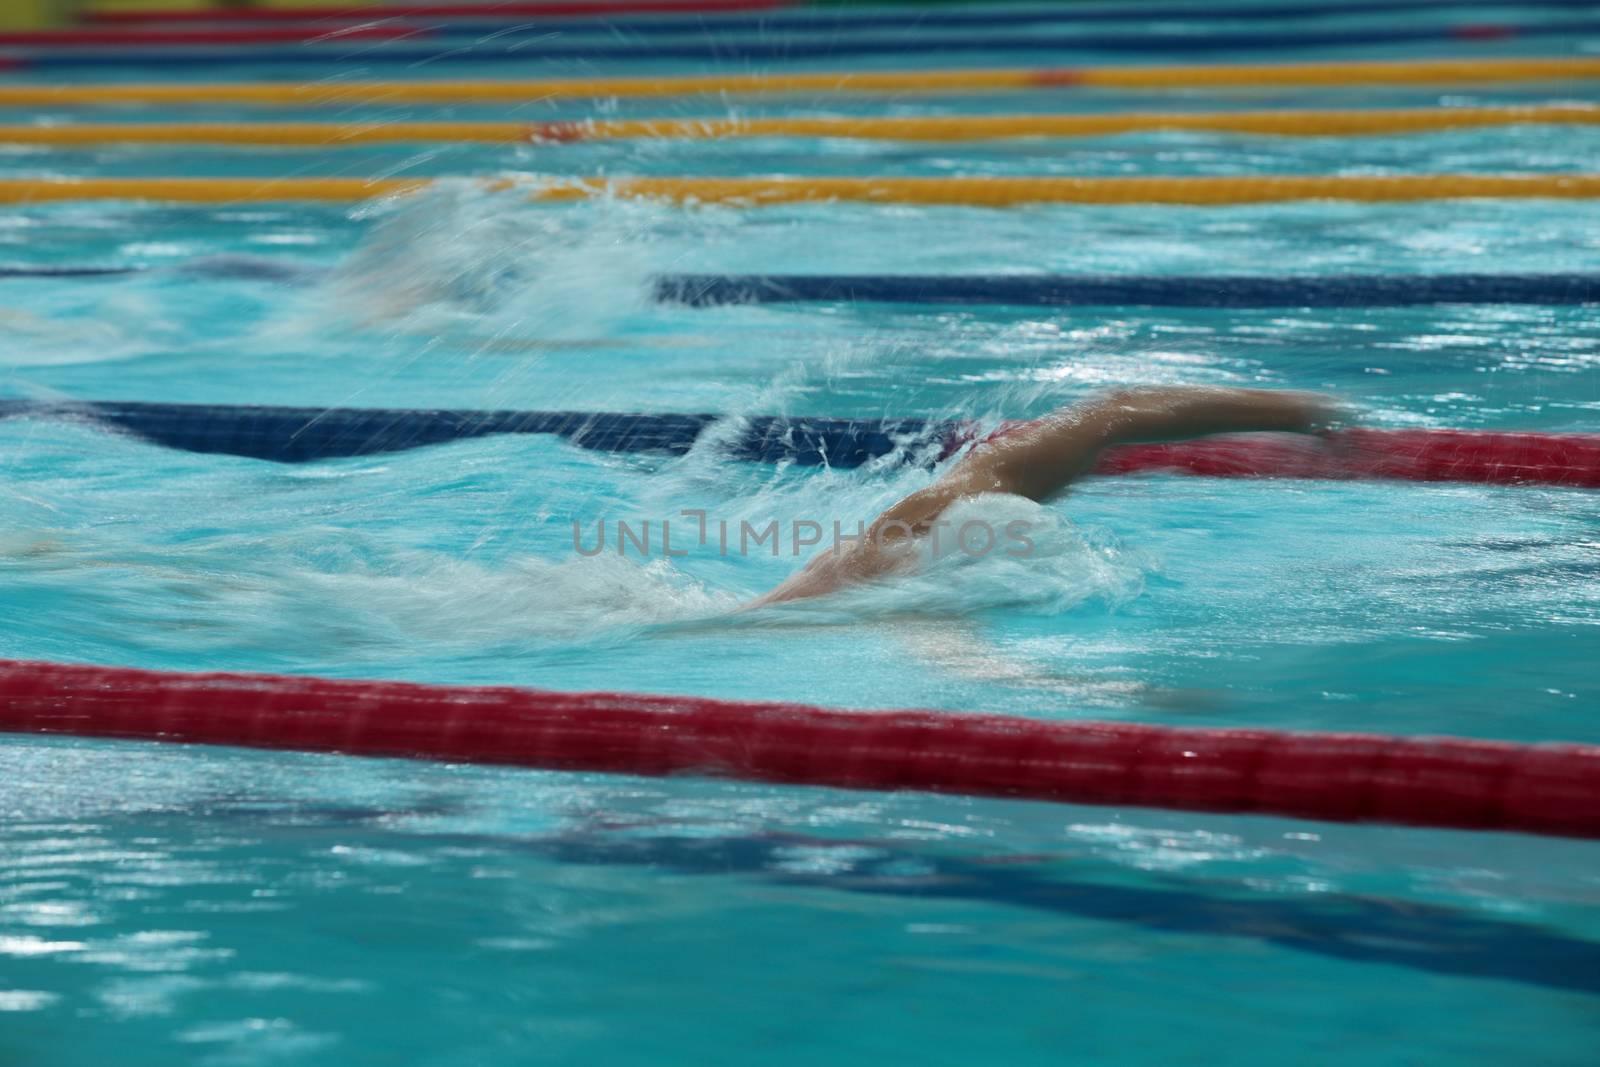 Fast swimmer motion blur by mrivserg